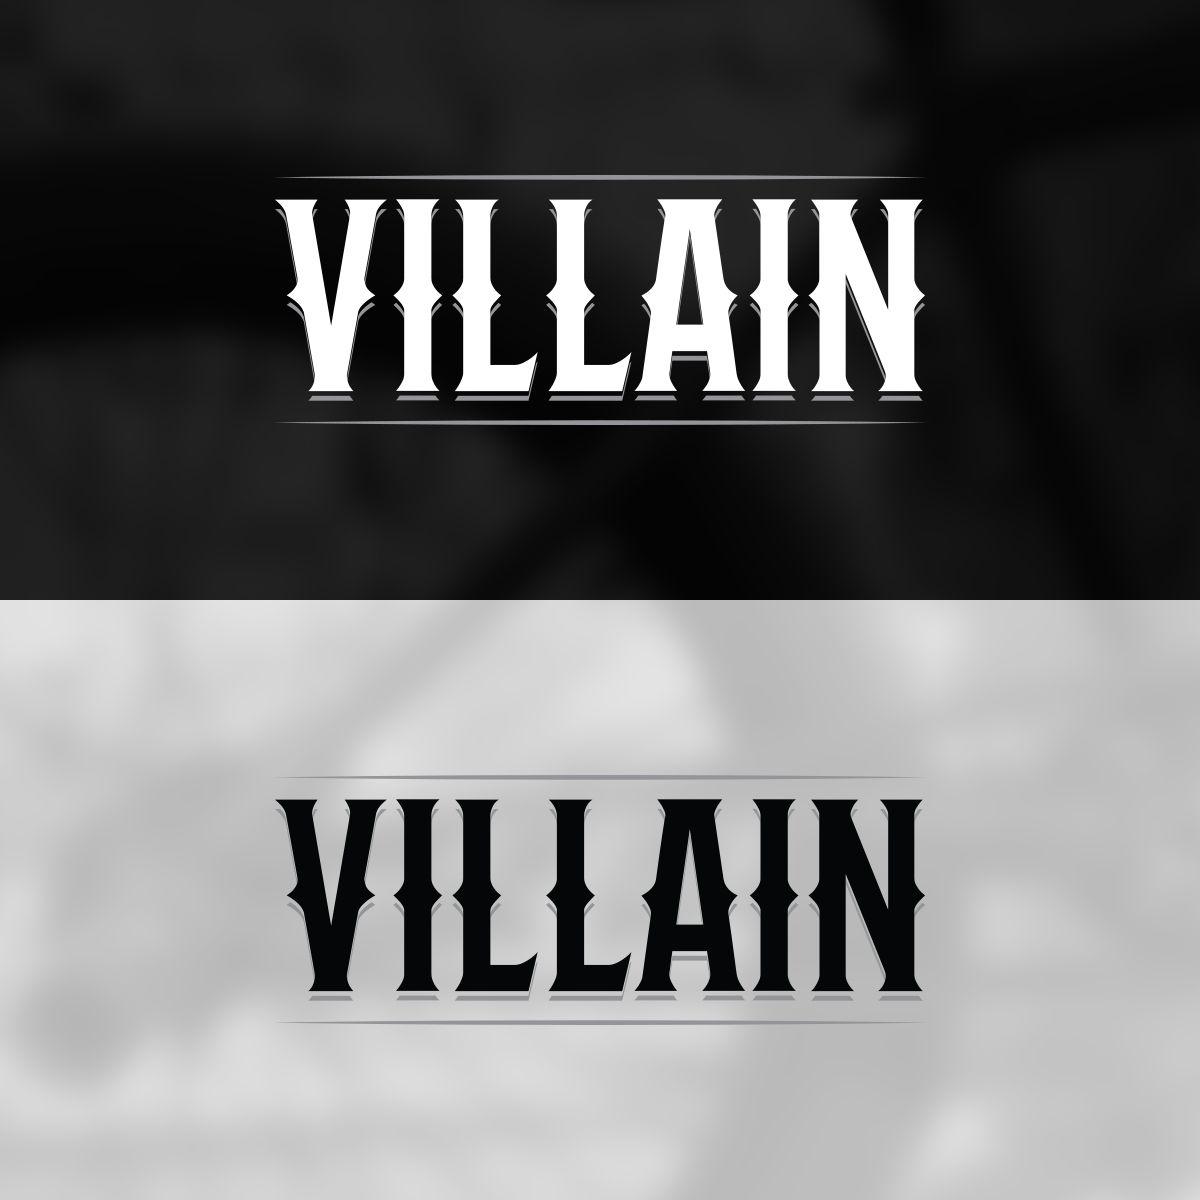 Villian Logo - Logo Design for VILLAIN or Villain by Roland Hawk. Design